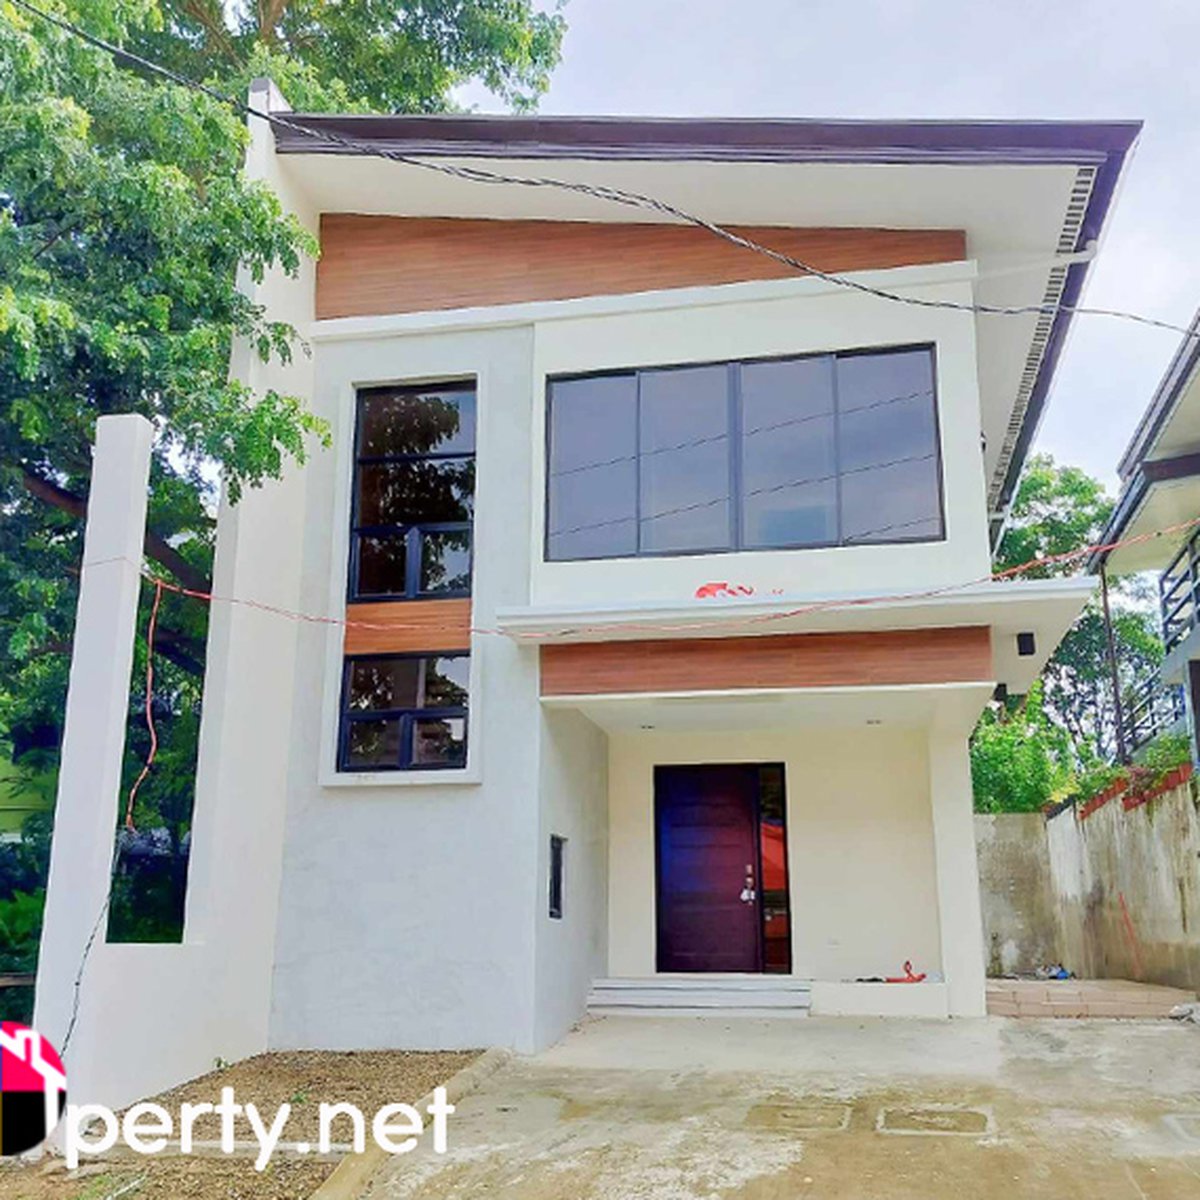 3-bedroom Single Attached House For Sale in Cebu City Cebu